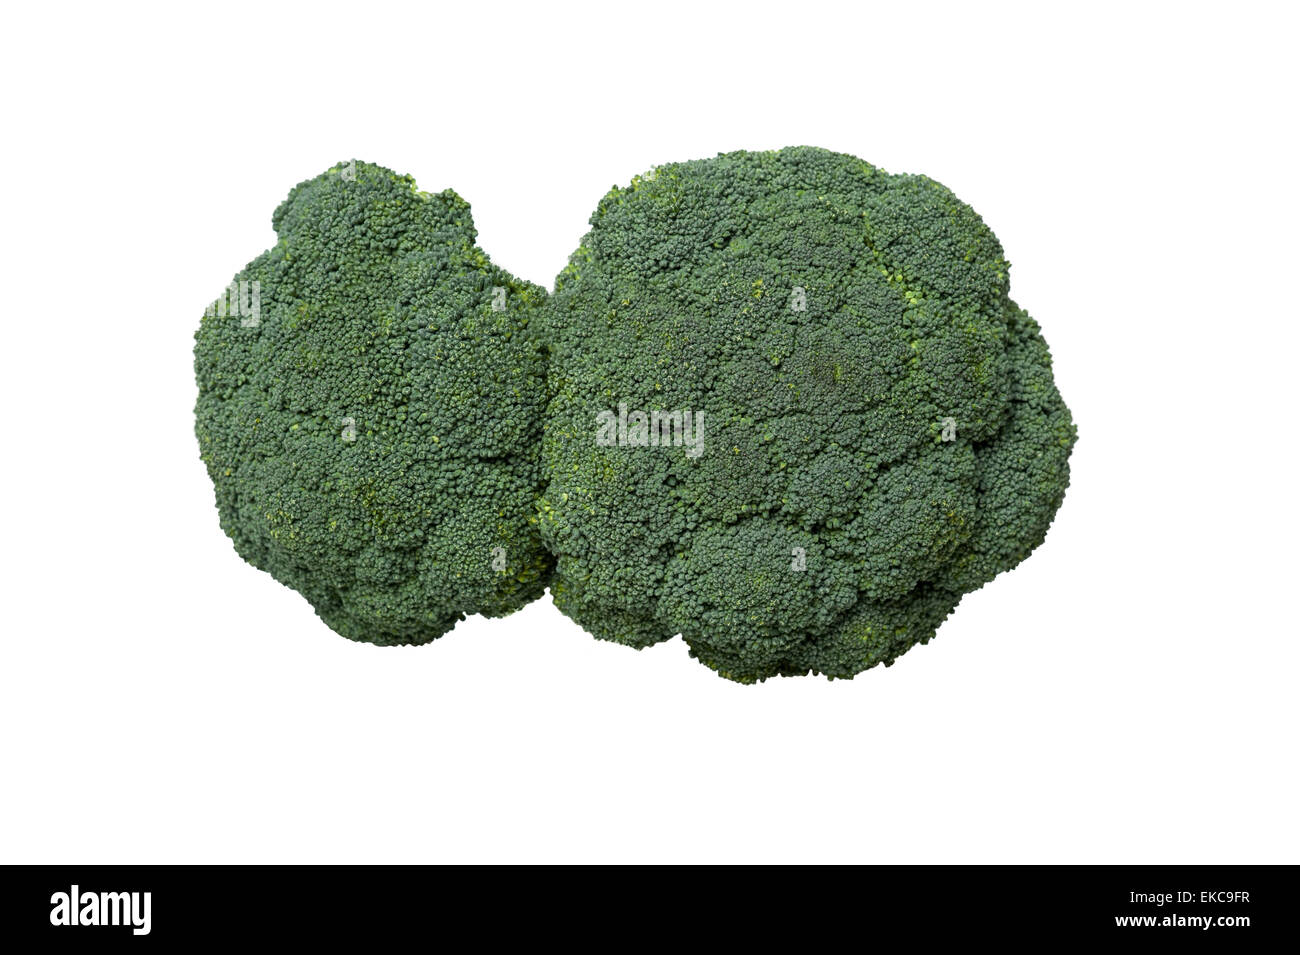 Broccoli vegetable isolated on white Stock Photo